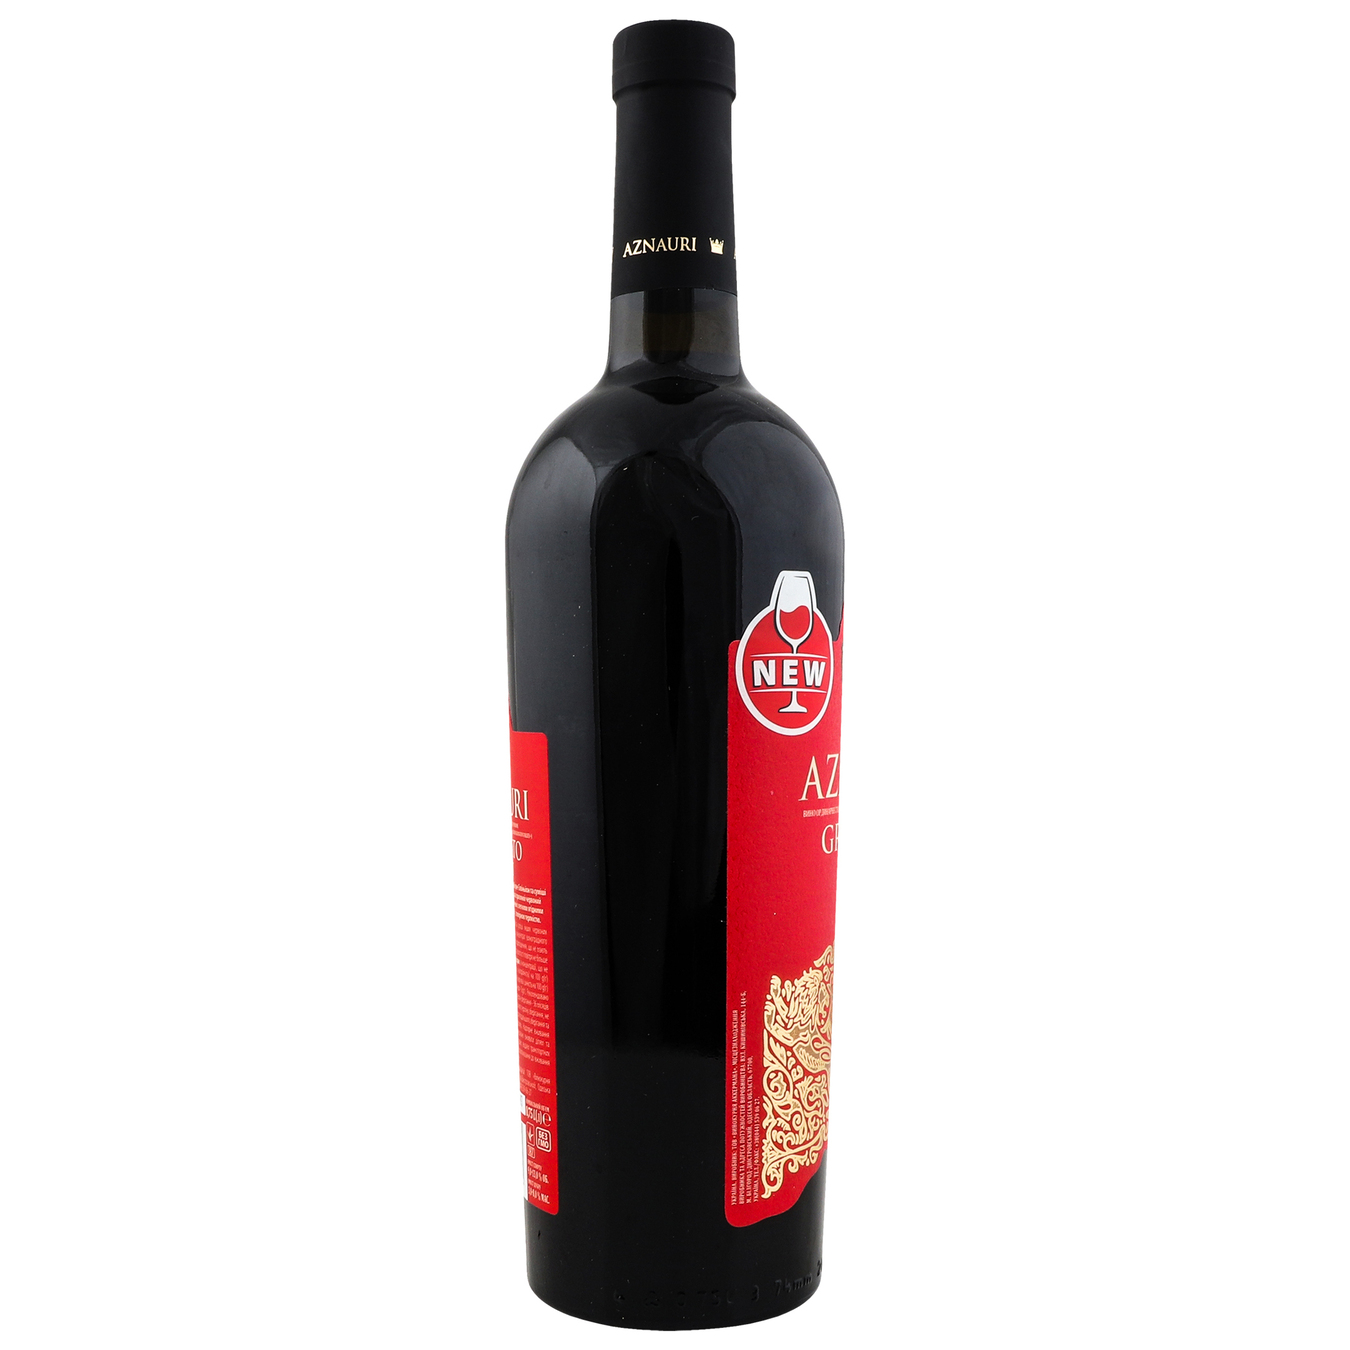 Aznauri Granato Valley red semi-sweet wine 13% 0.75 l 4